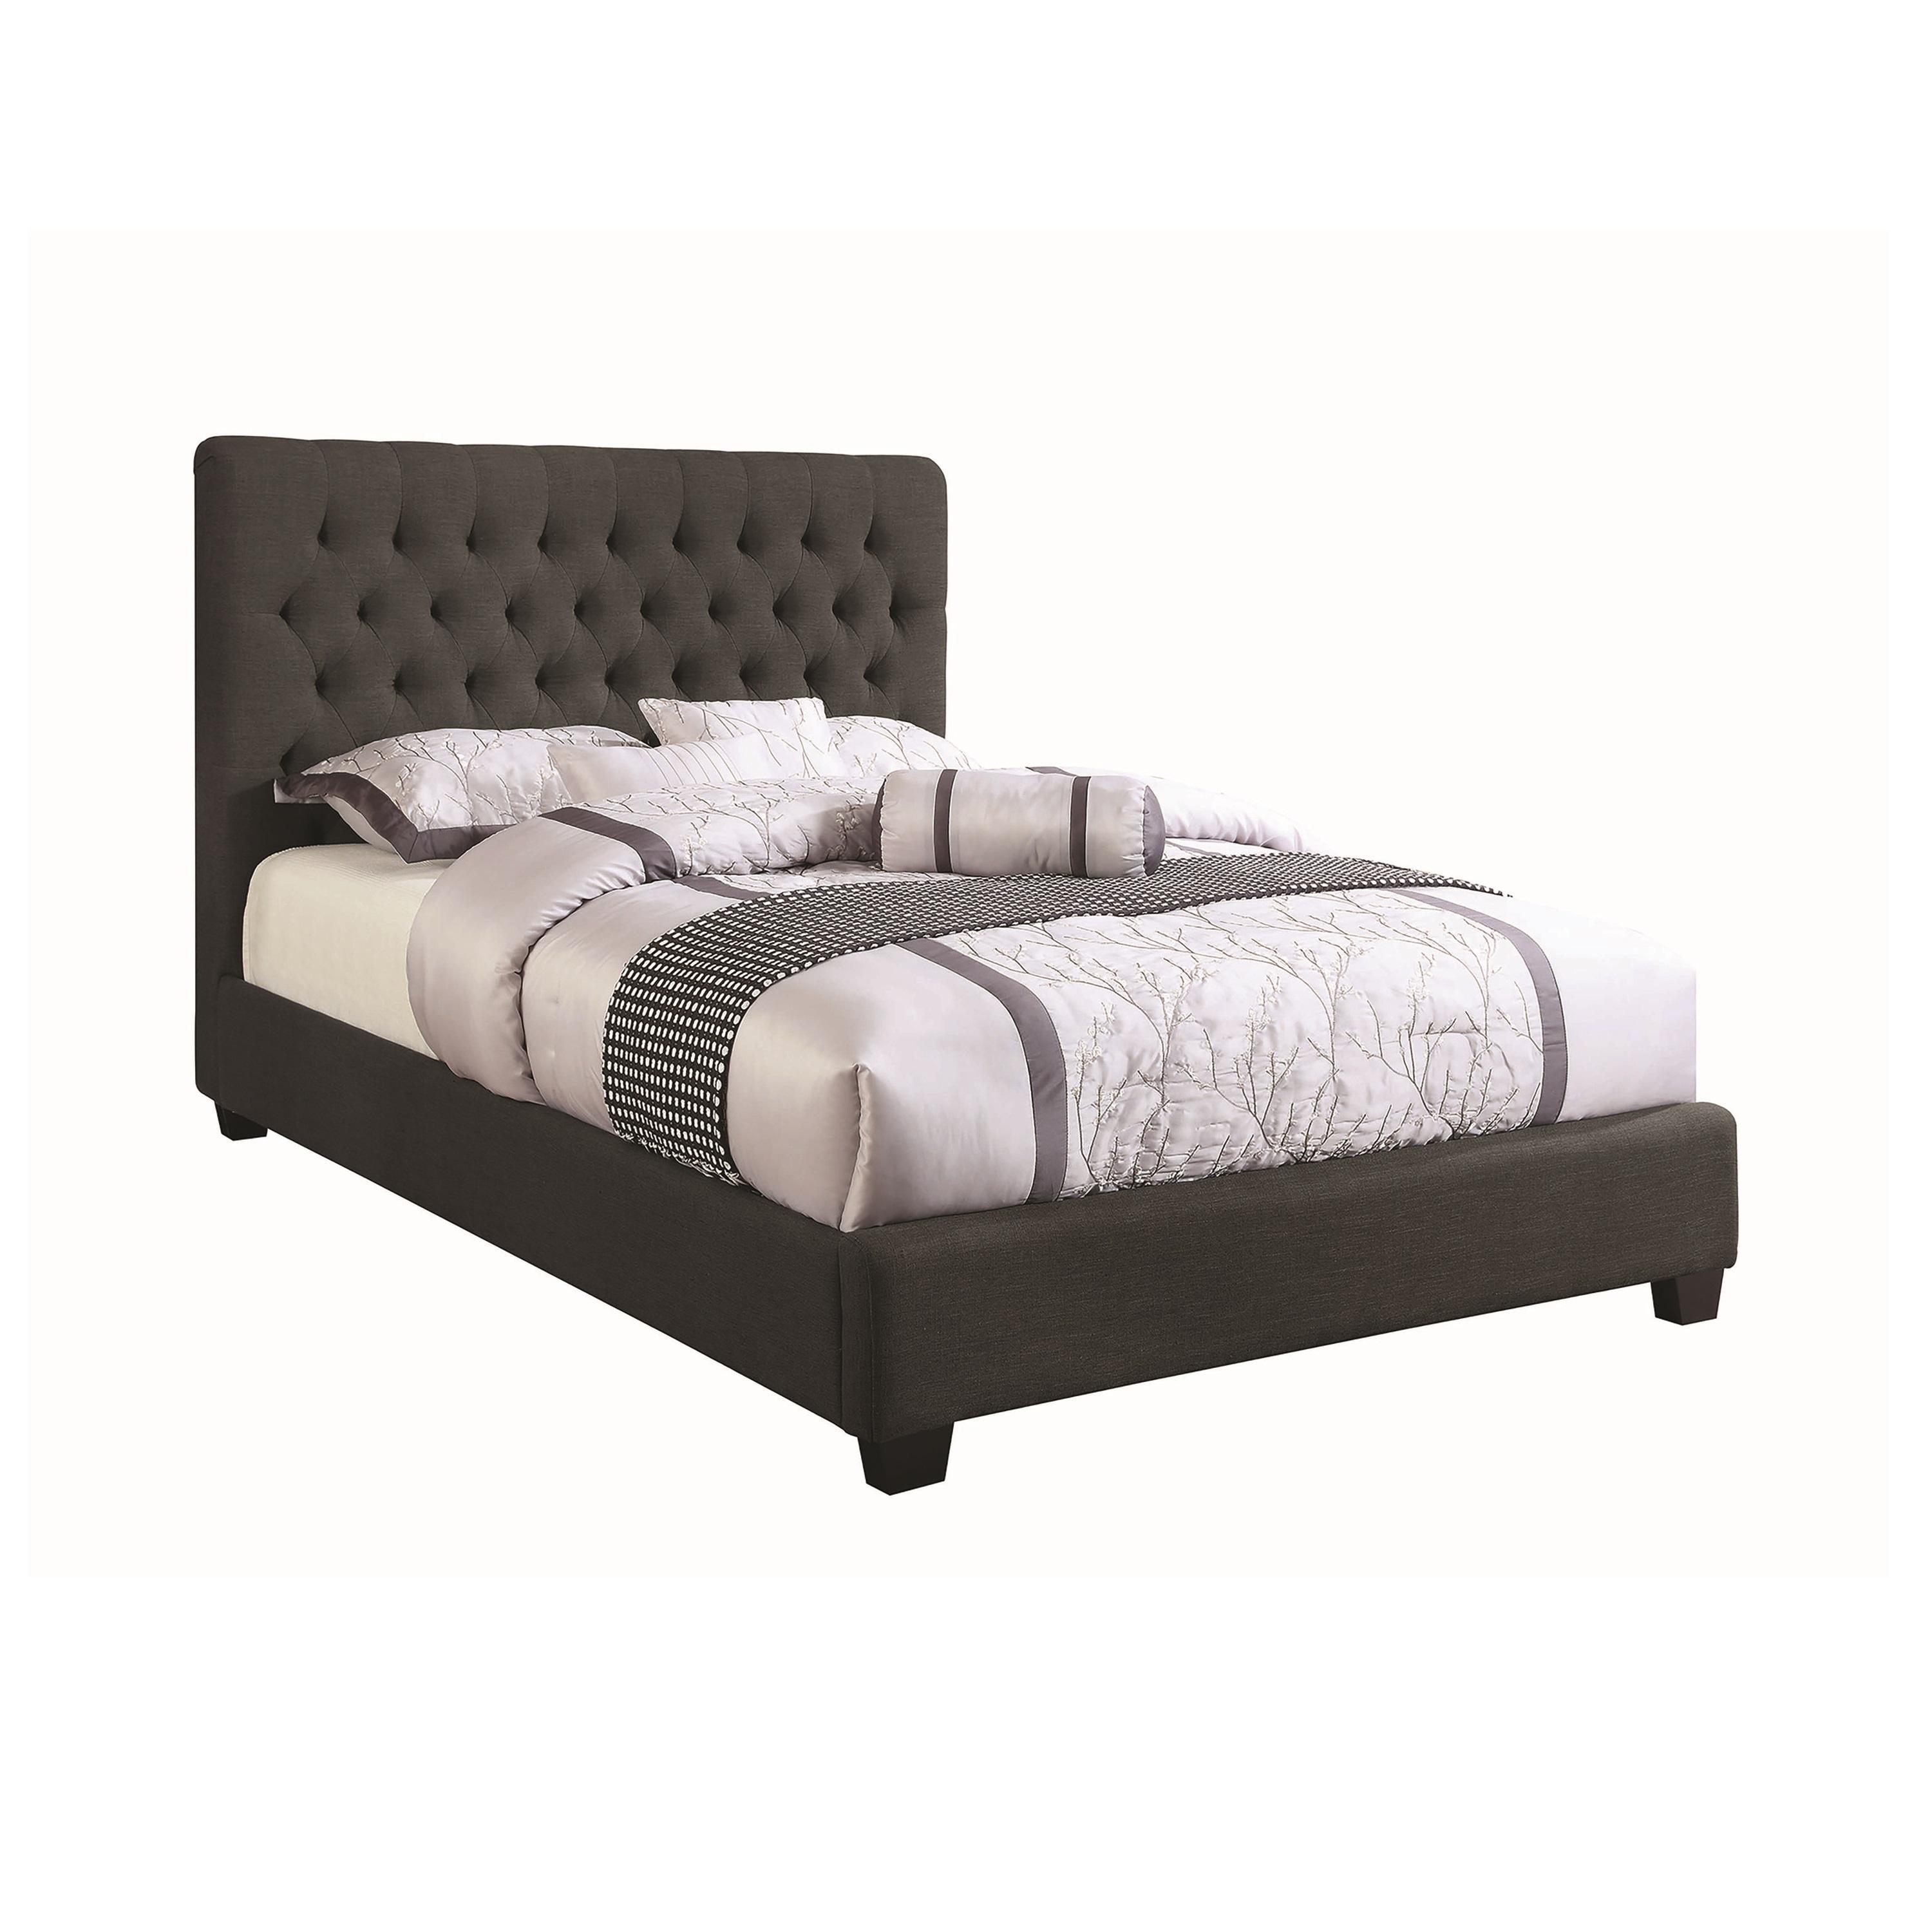 Contemporary Bed 300529KE Chloe 300529KE in Charcoal Fabric